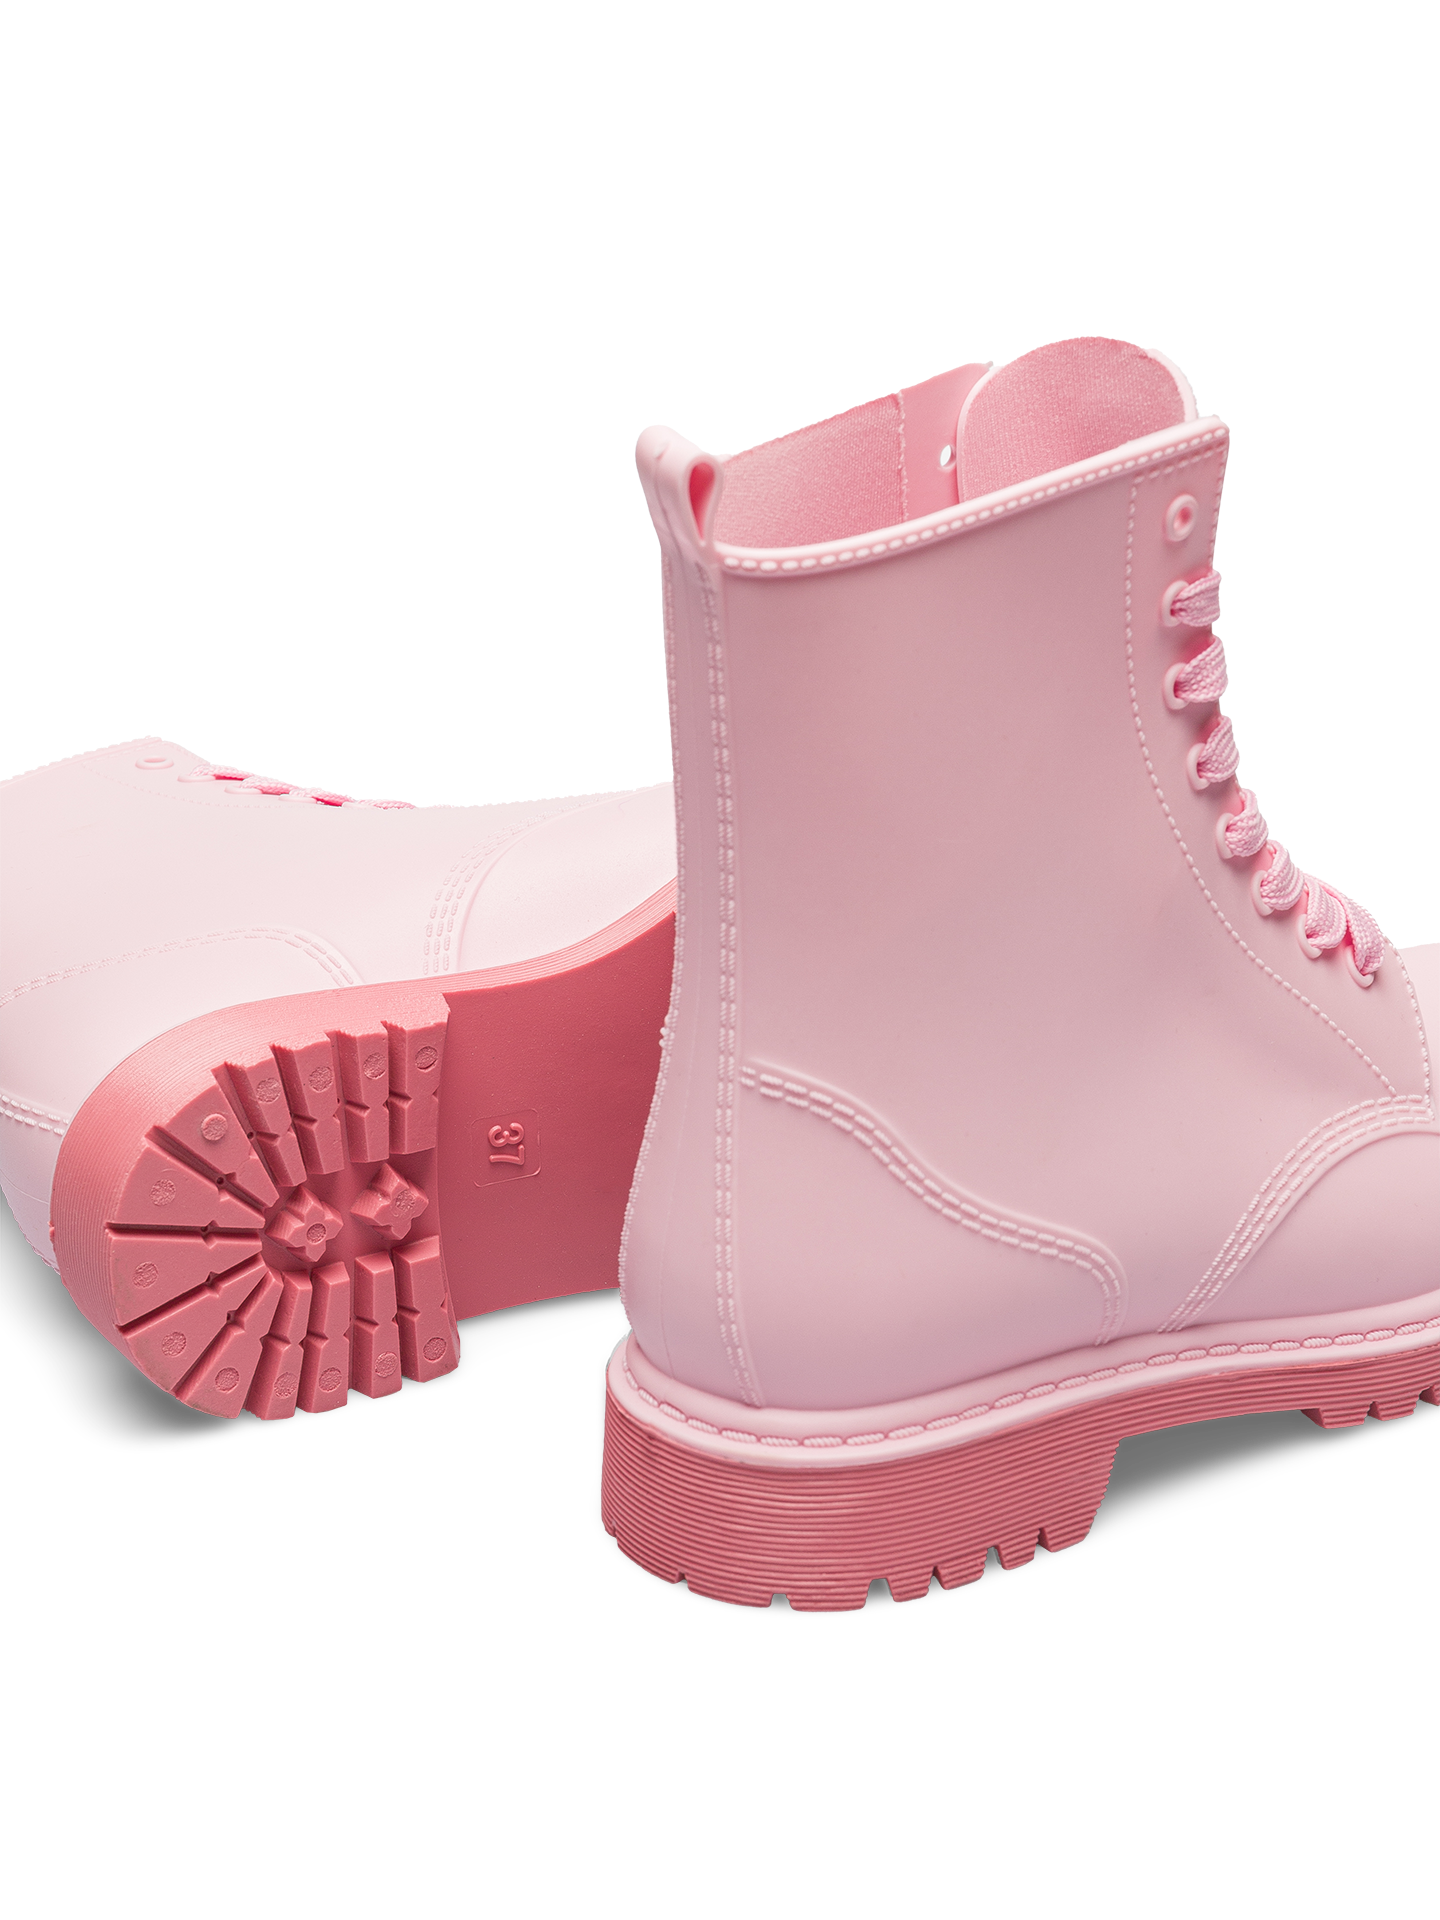 Pastel Pink Women's Rain Boots